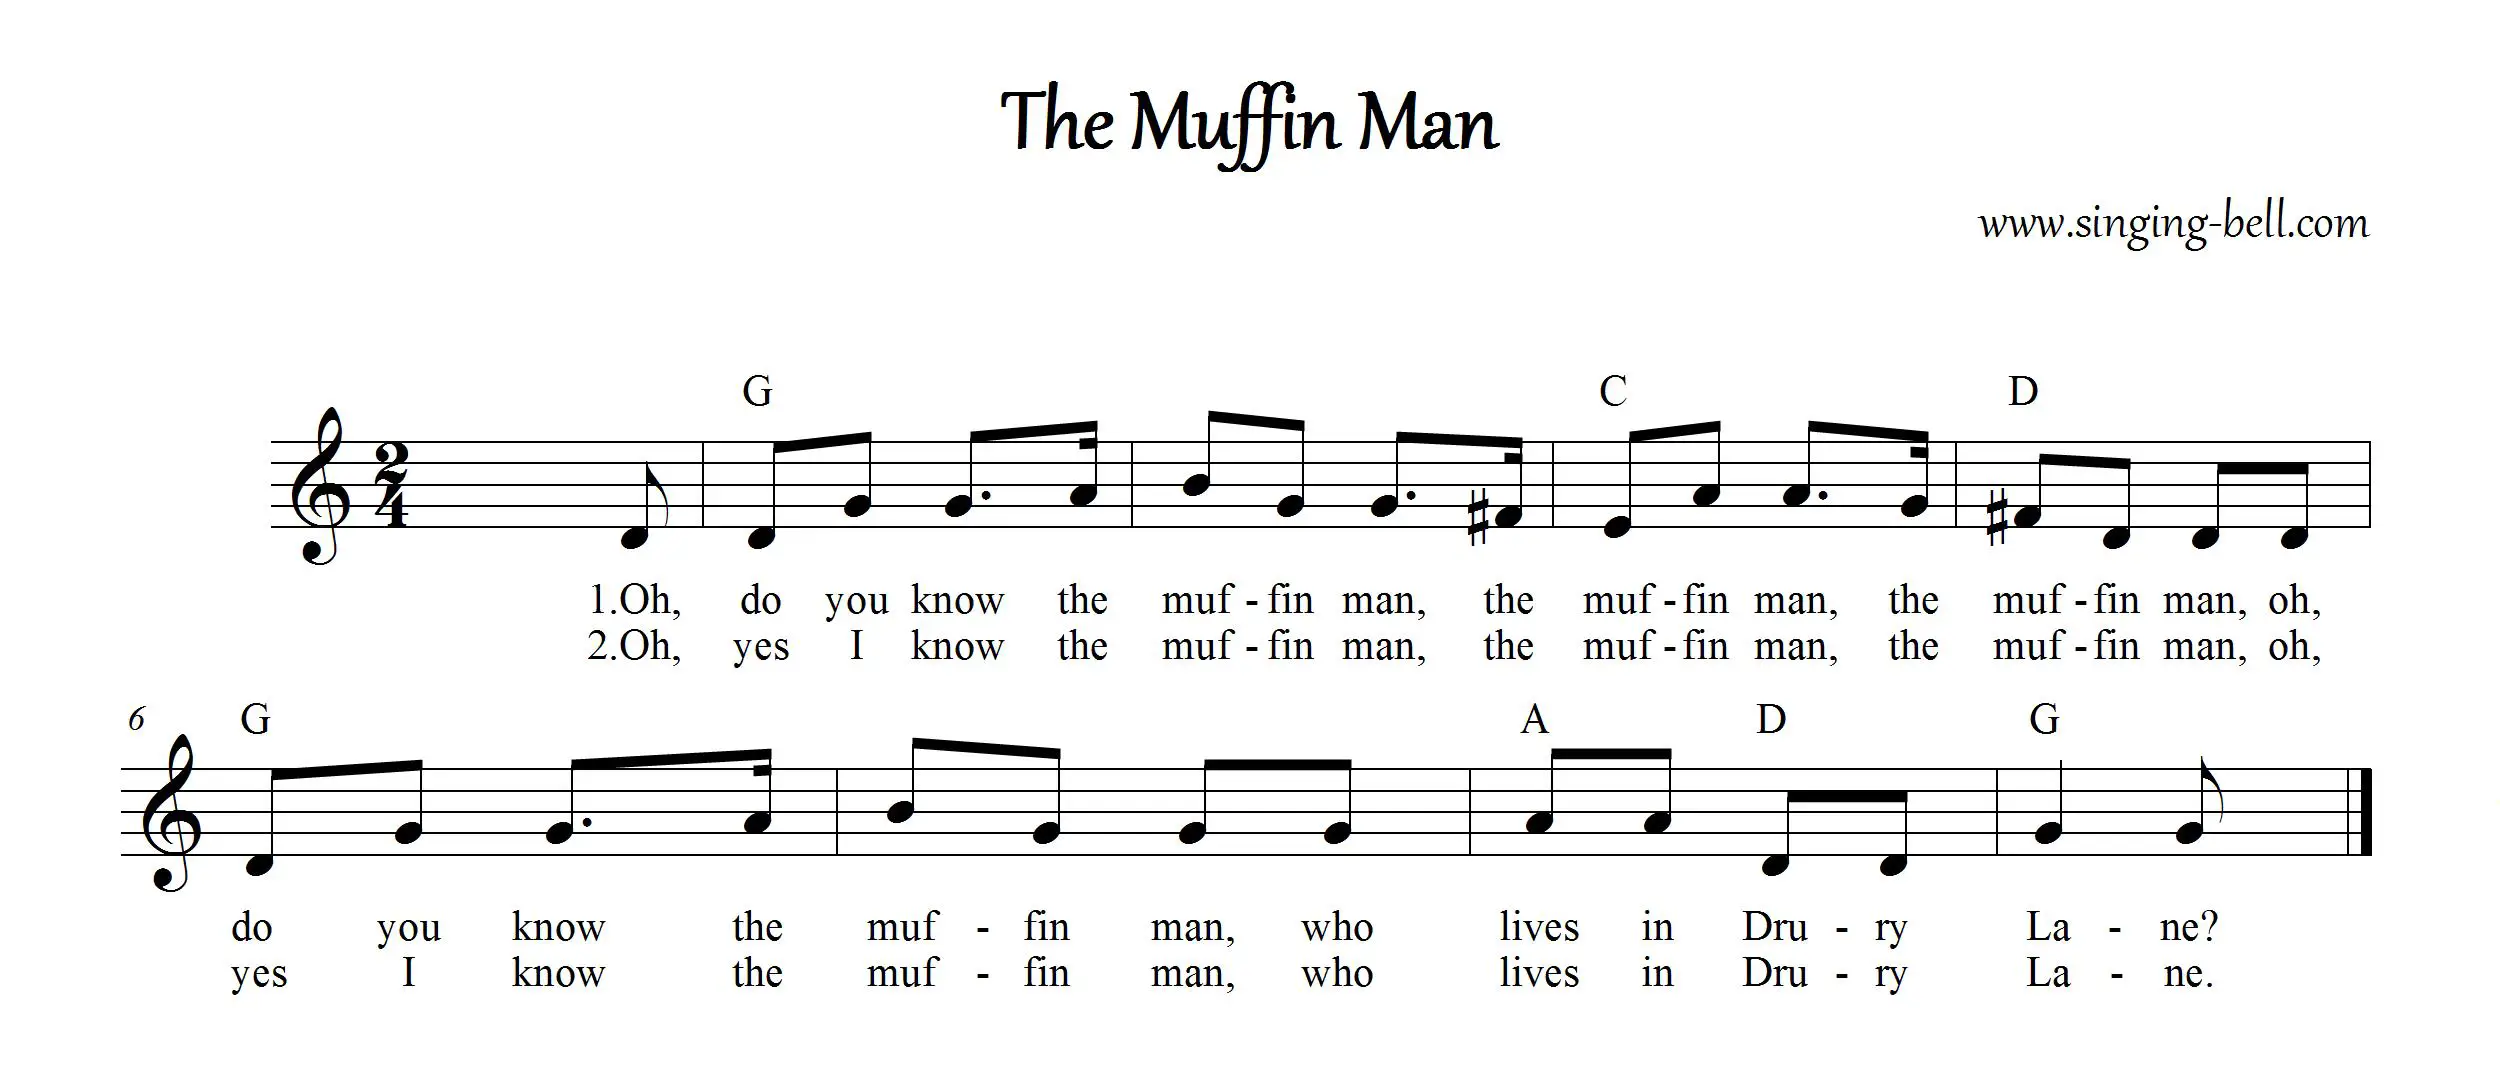 The Muffin Man Instrumental Nursery Rhyme - Free Music Score Download